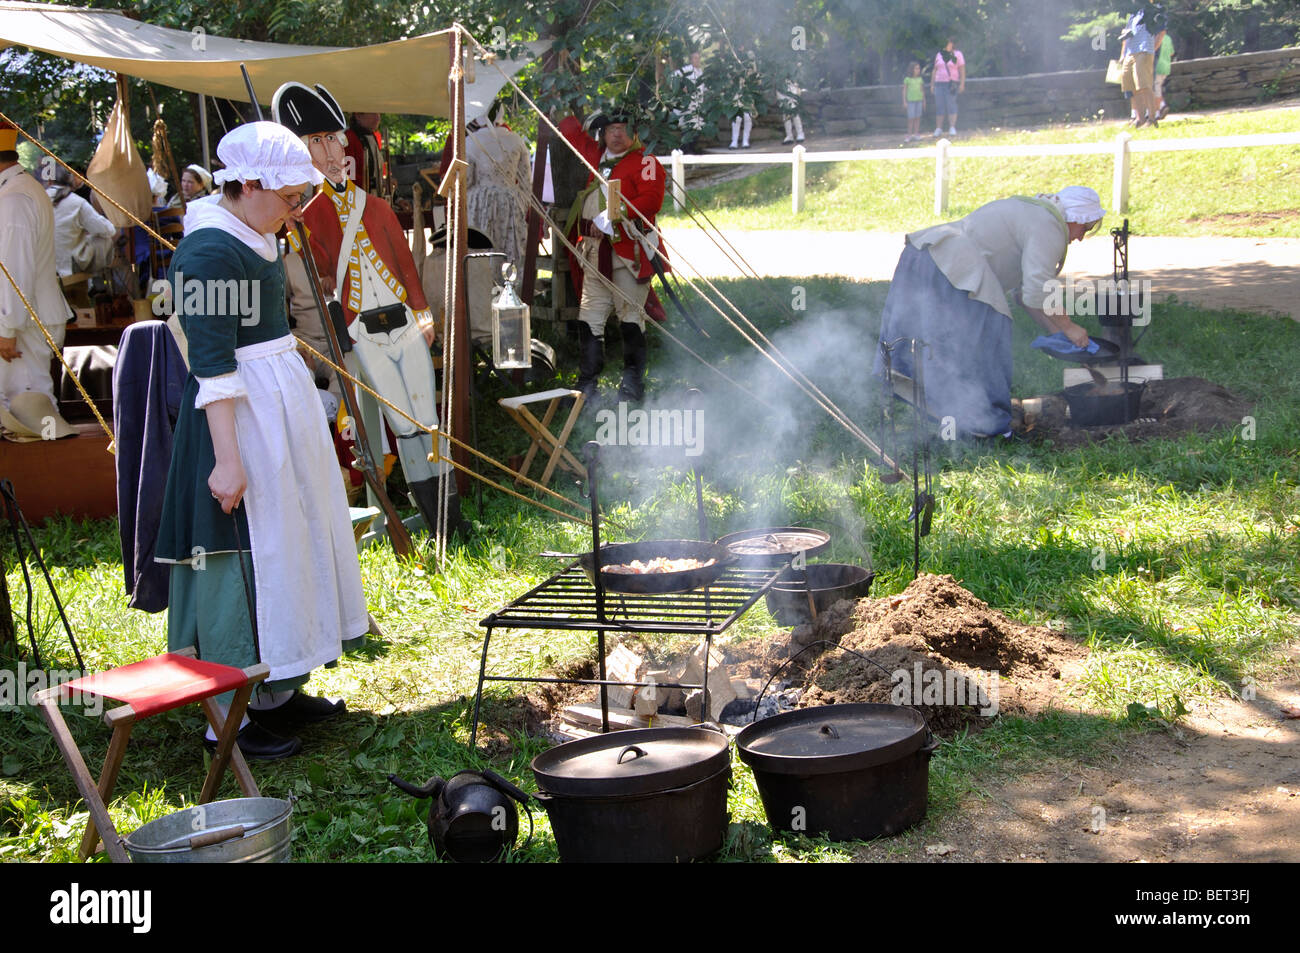 Open fire cooking - costumed American Revolutionary War (1770's) era re-enactment Stock Photo